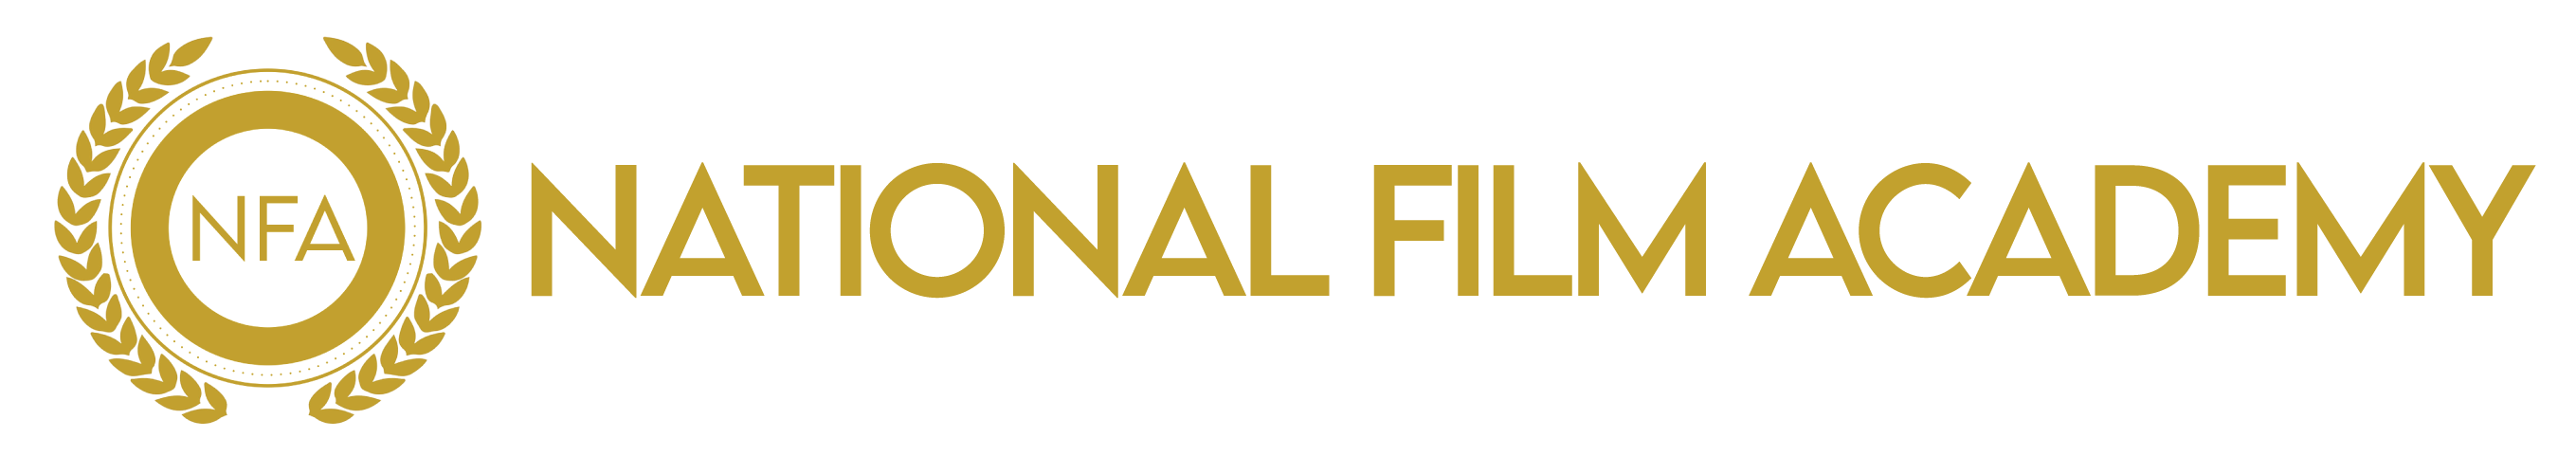 National Film Academy Logo